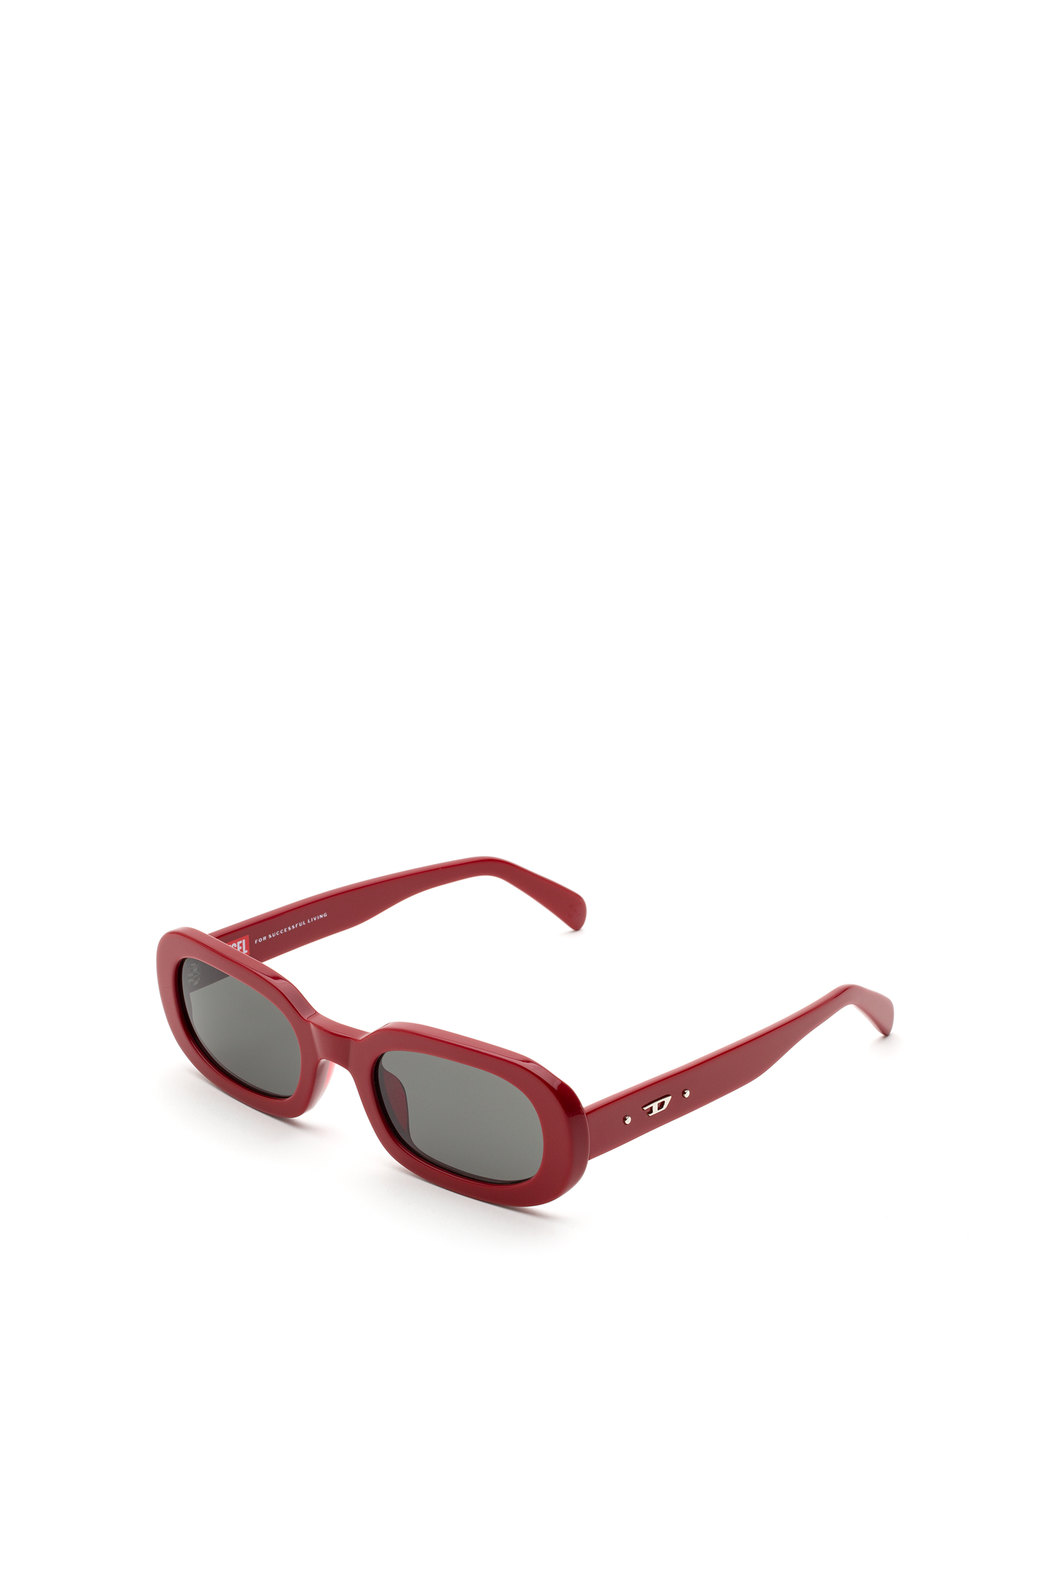 Iconic Oval Sunglasses